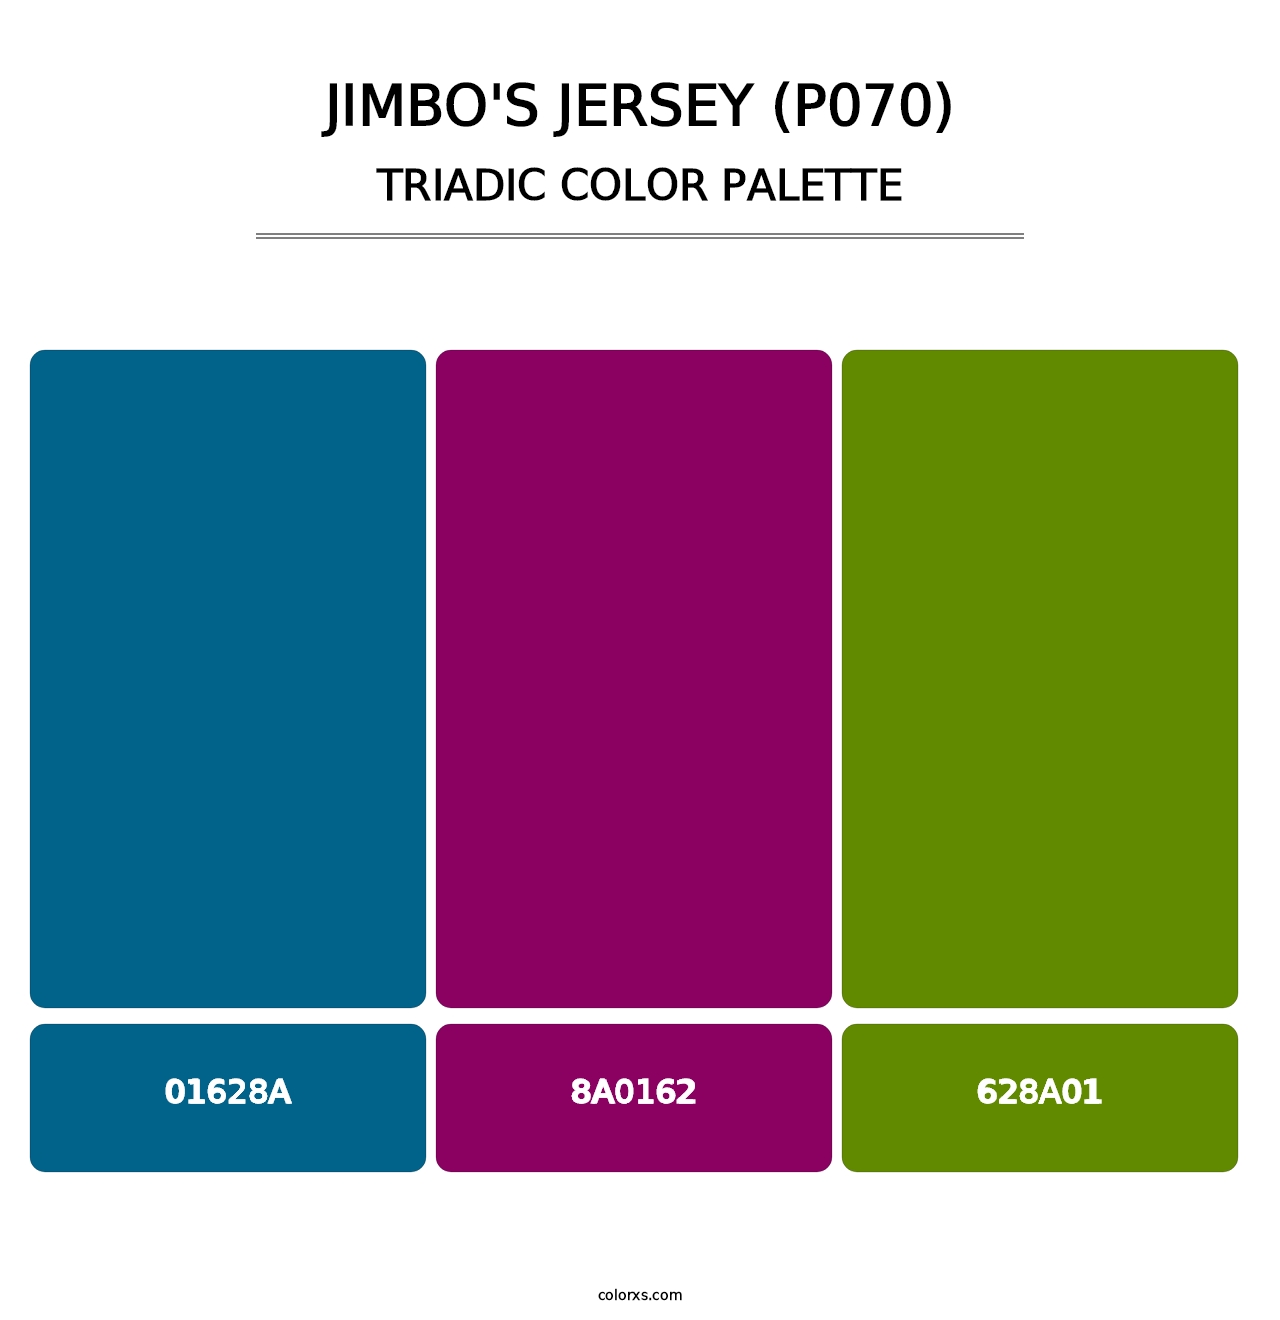 Jimbo's Jersey (P070) - Triadic Color Palette